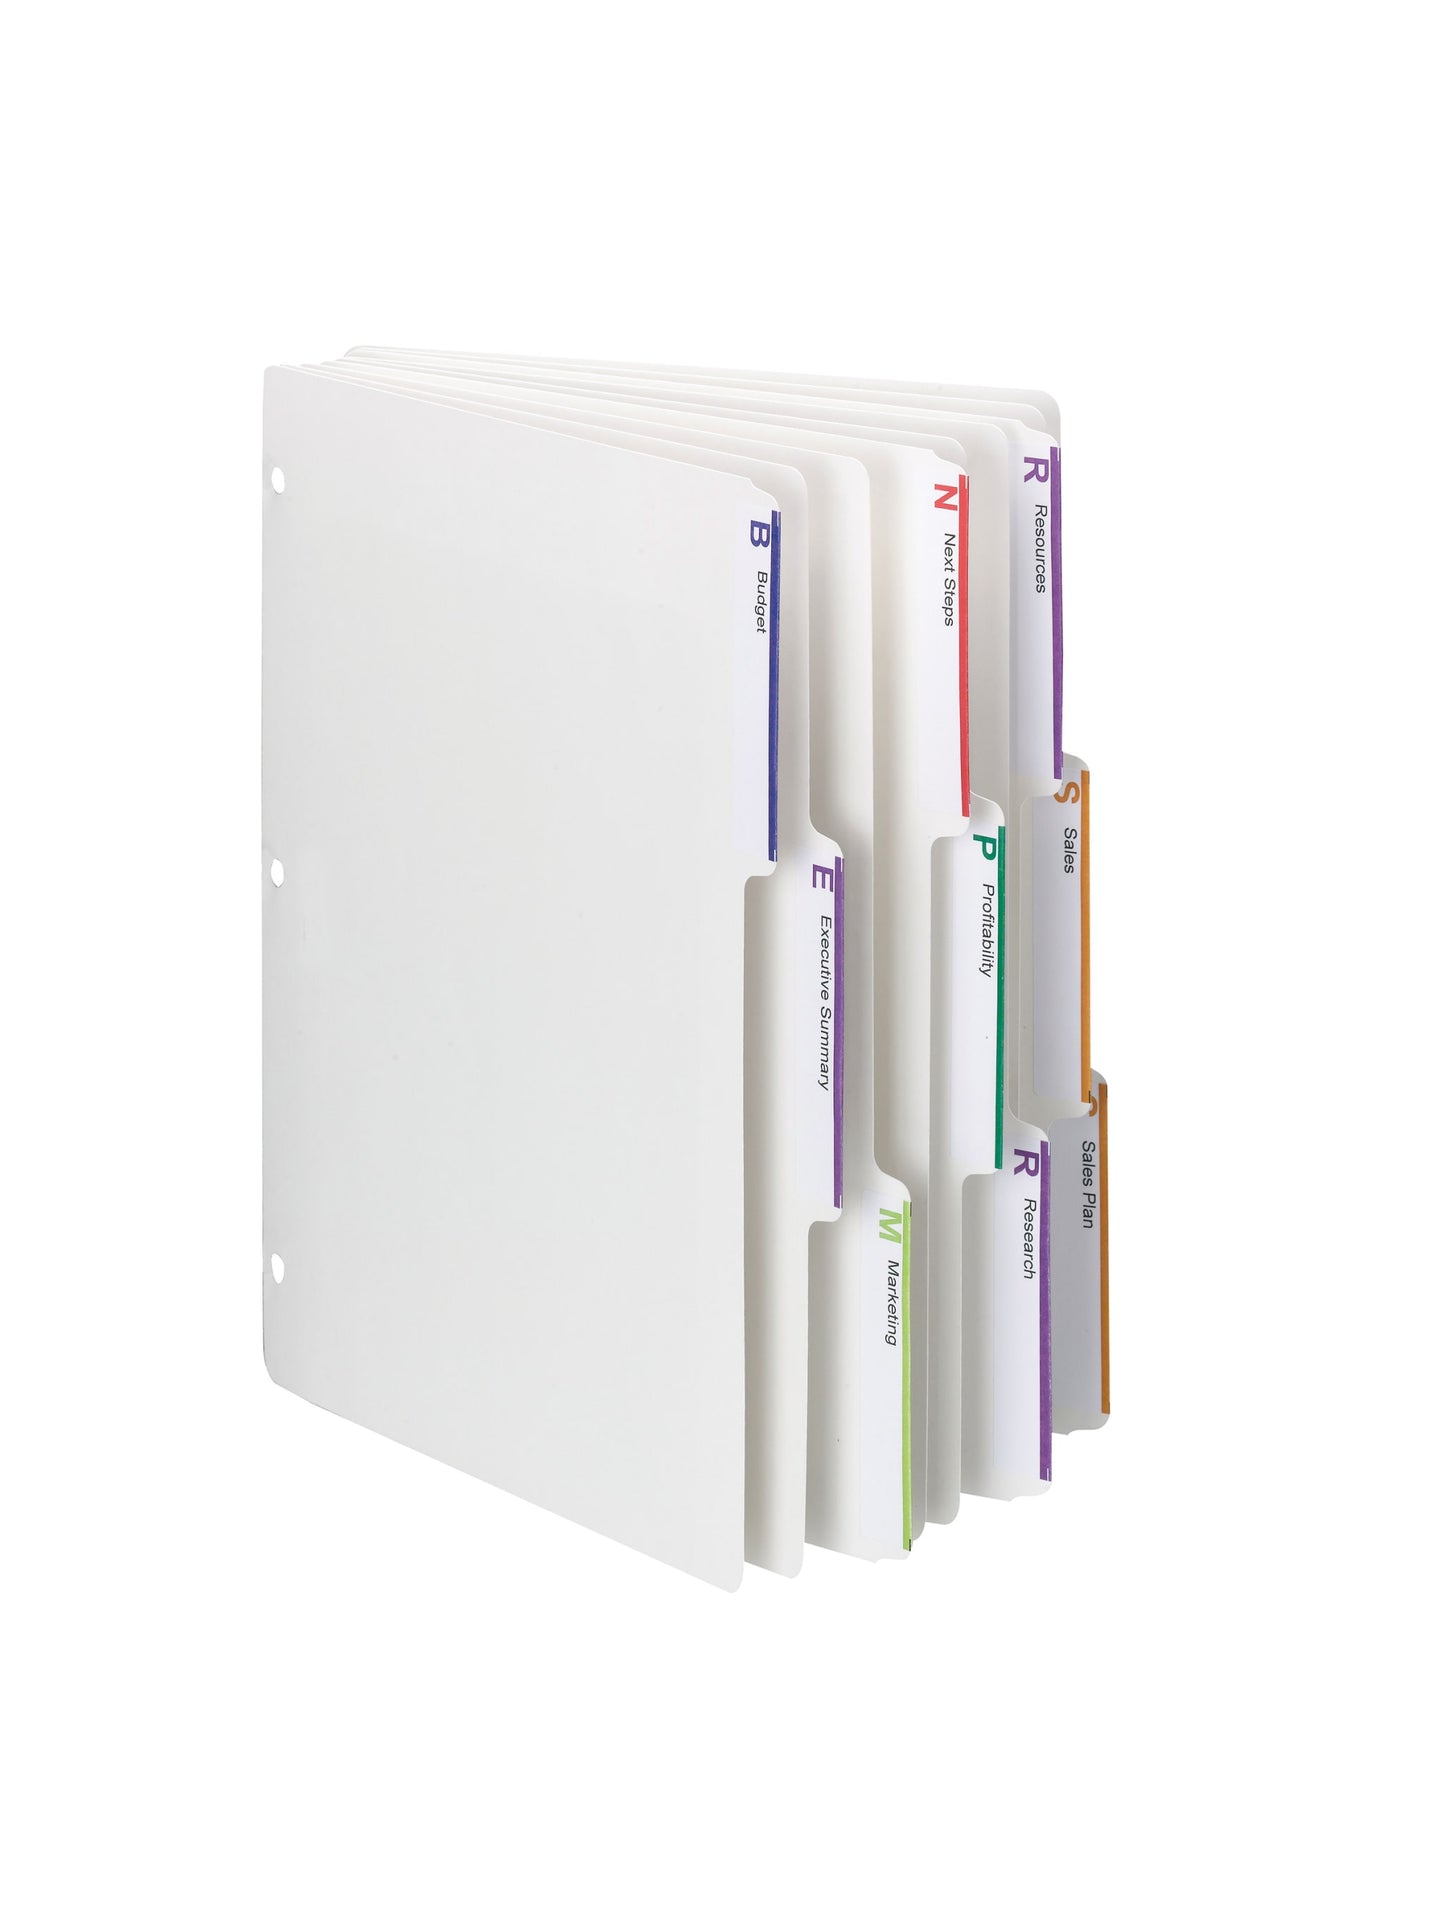 A4 Loose Leaf Notebook Binder 8 Tab 30 Rings 360 Sheets Ruled, White Black  2 Set | eBay